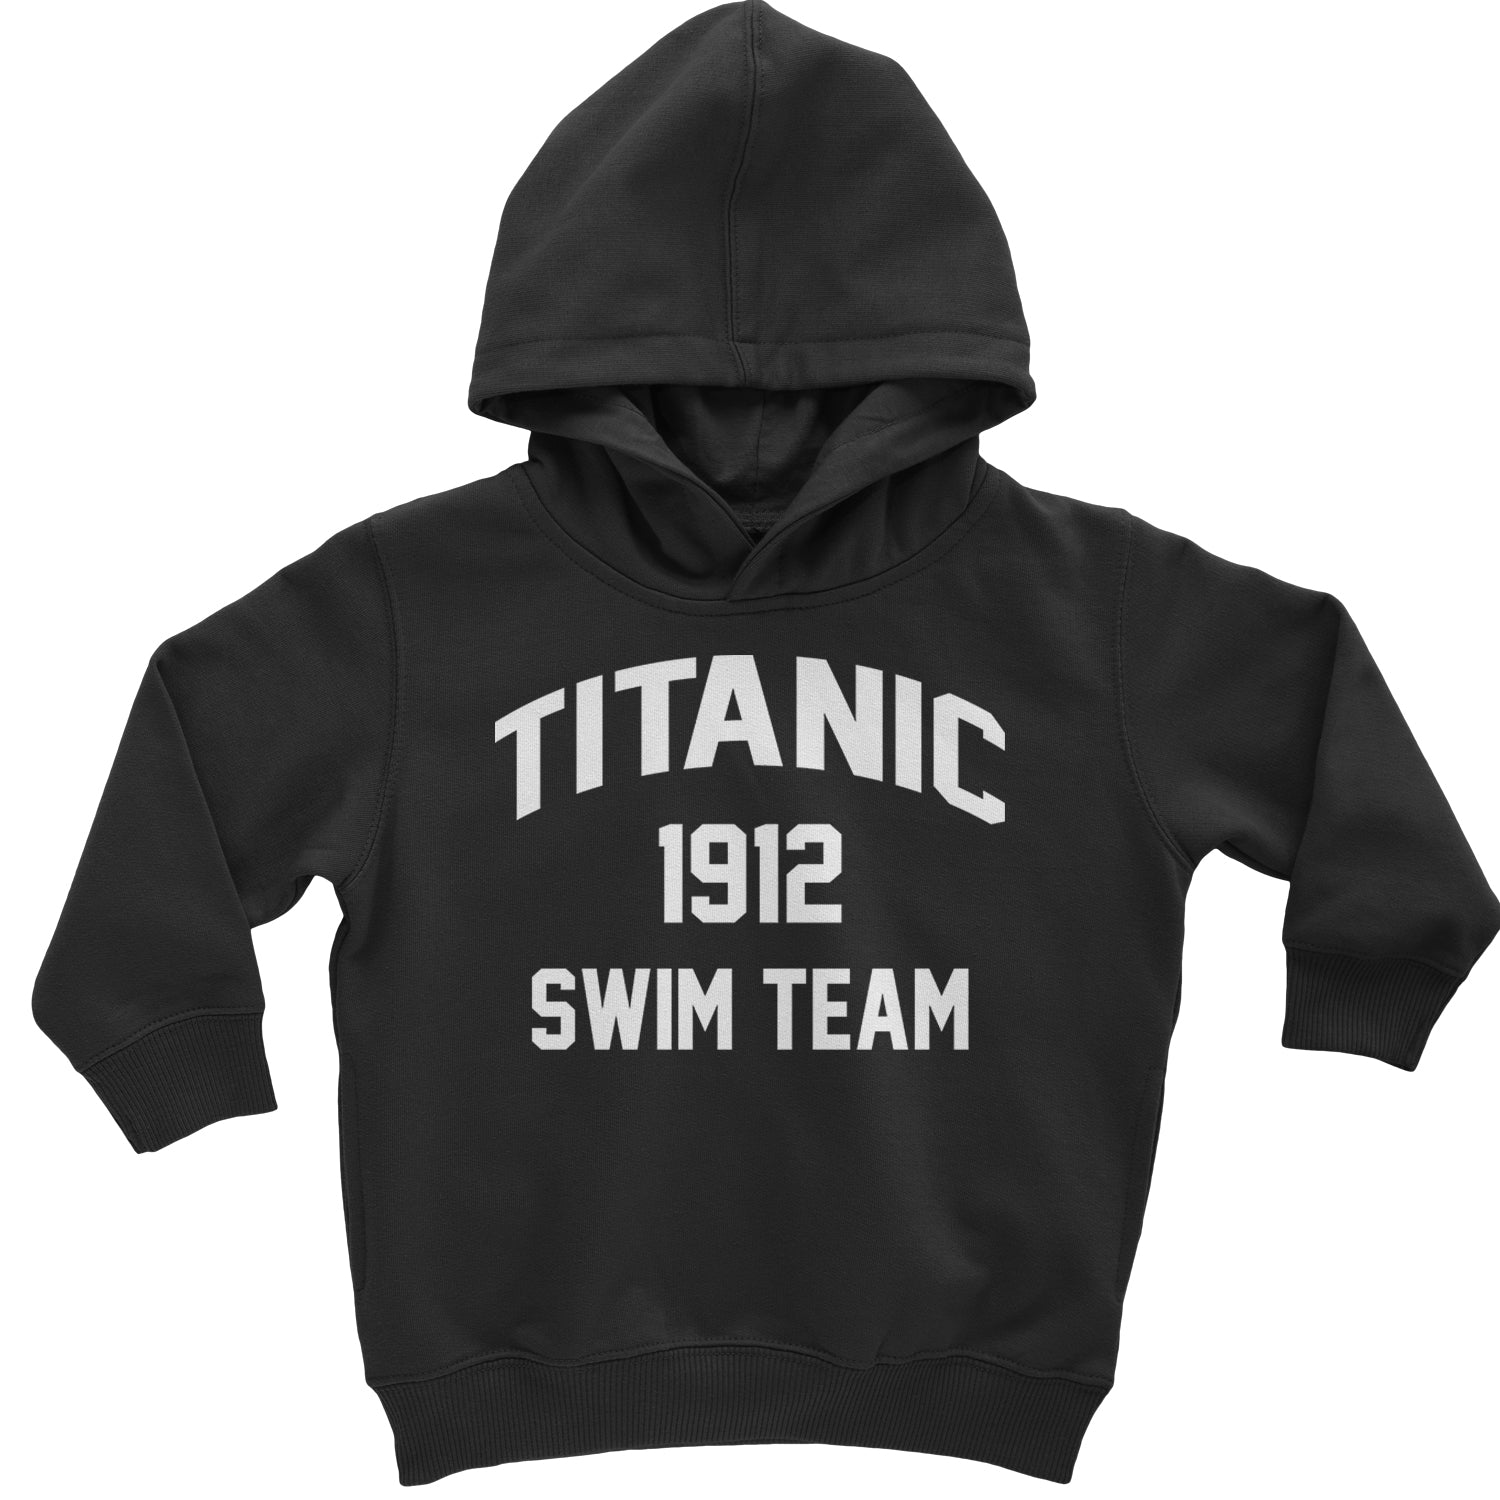 Titanic Swim Team 1912 Funny Cruise Toddler Hoodie And Infant Fleece Romper Black